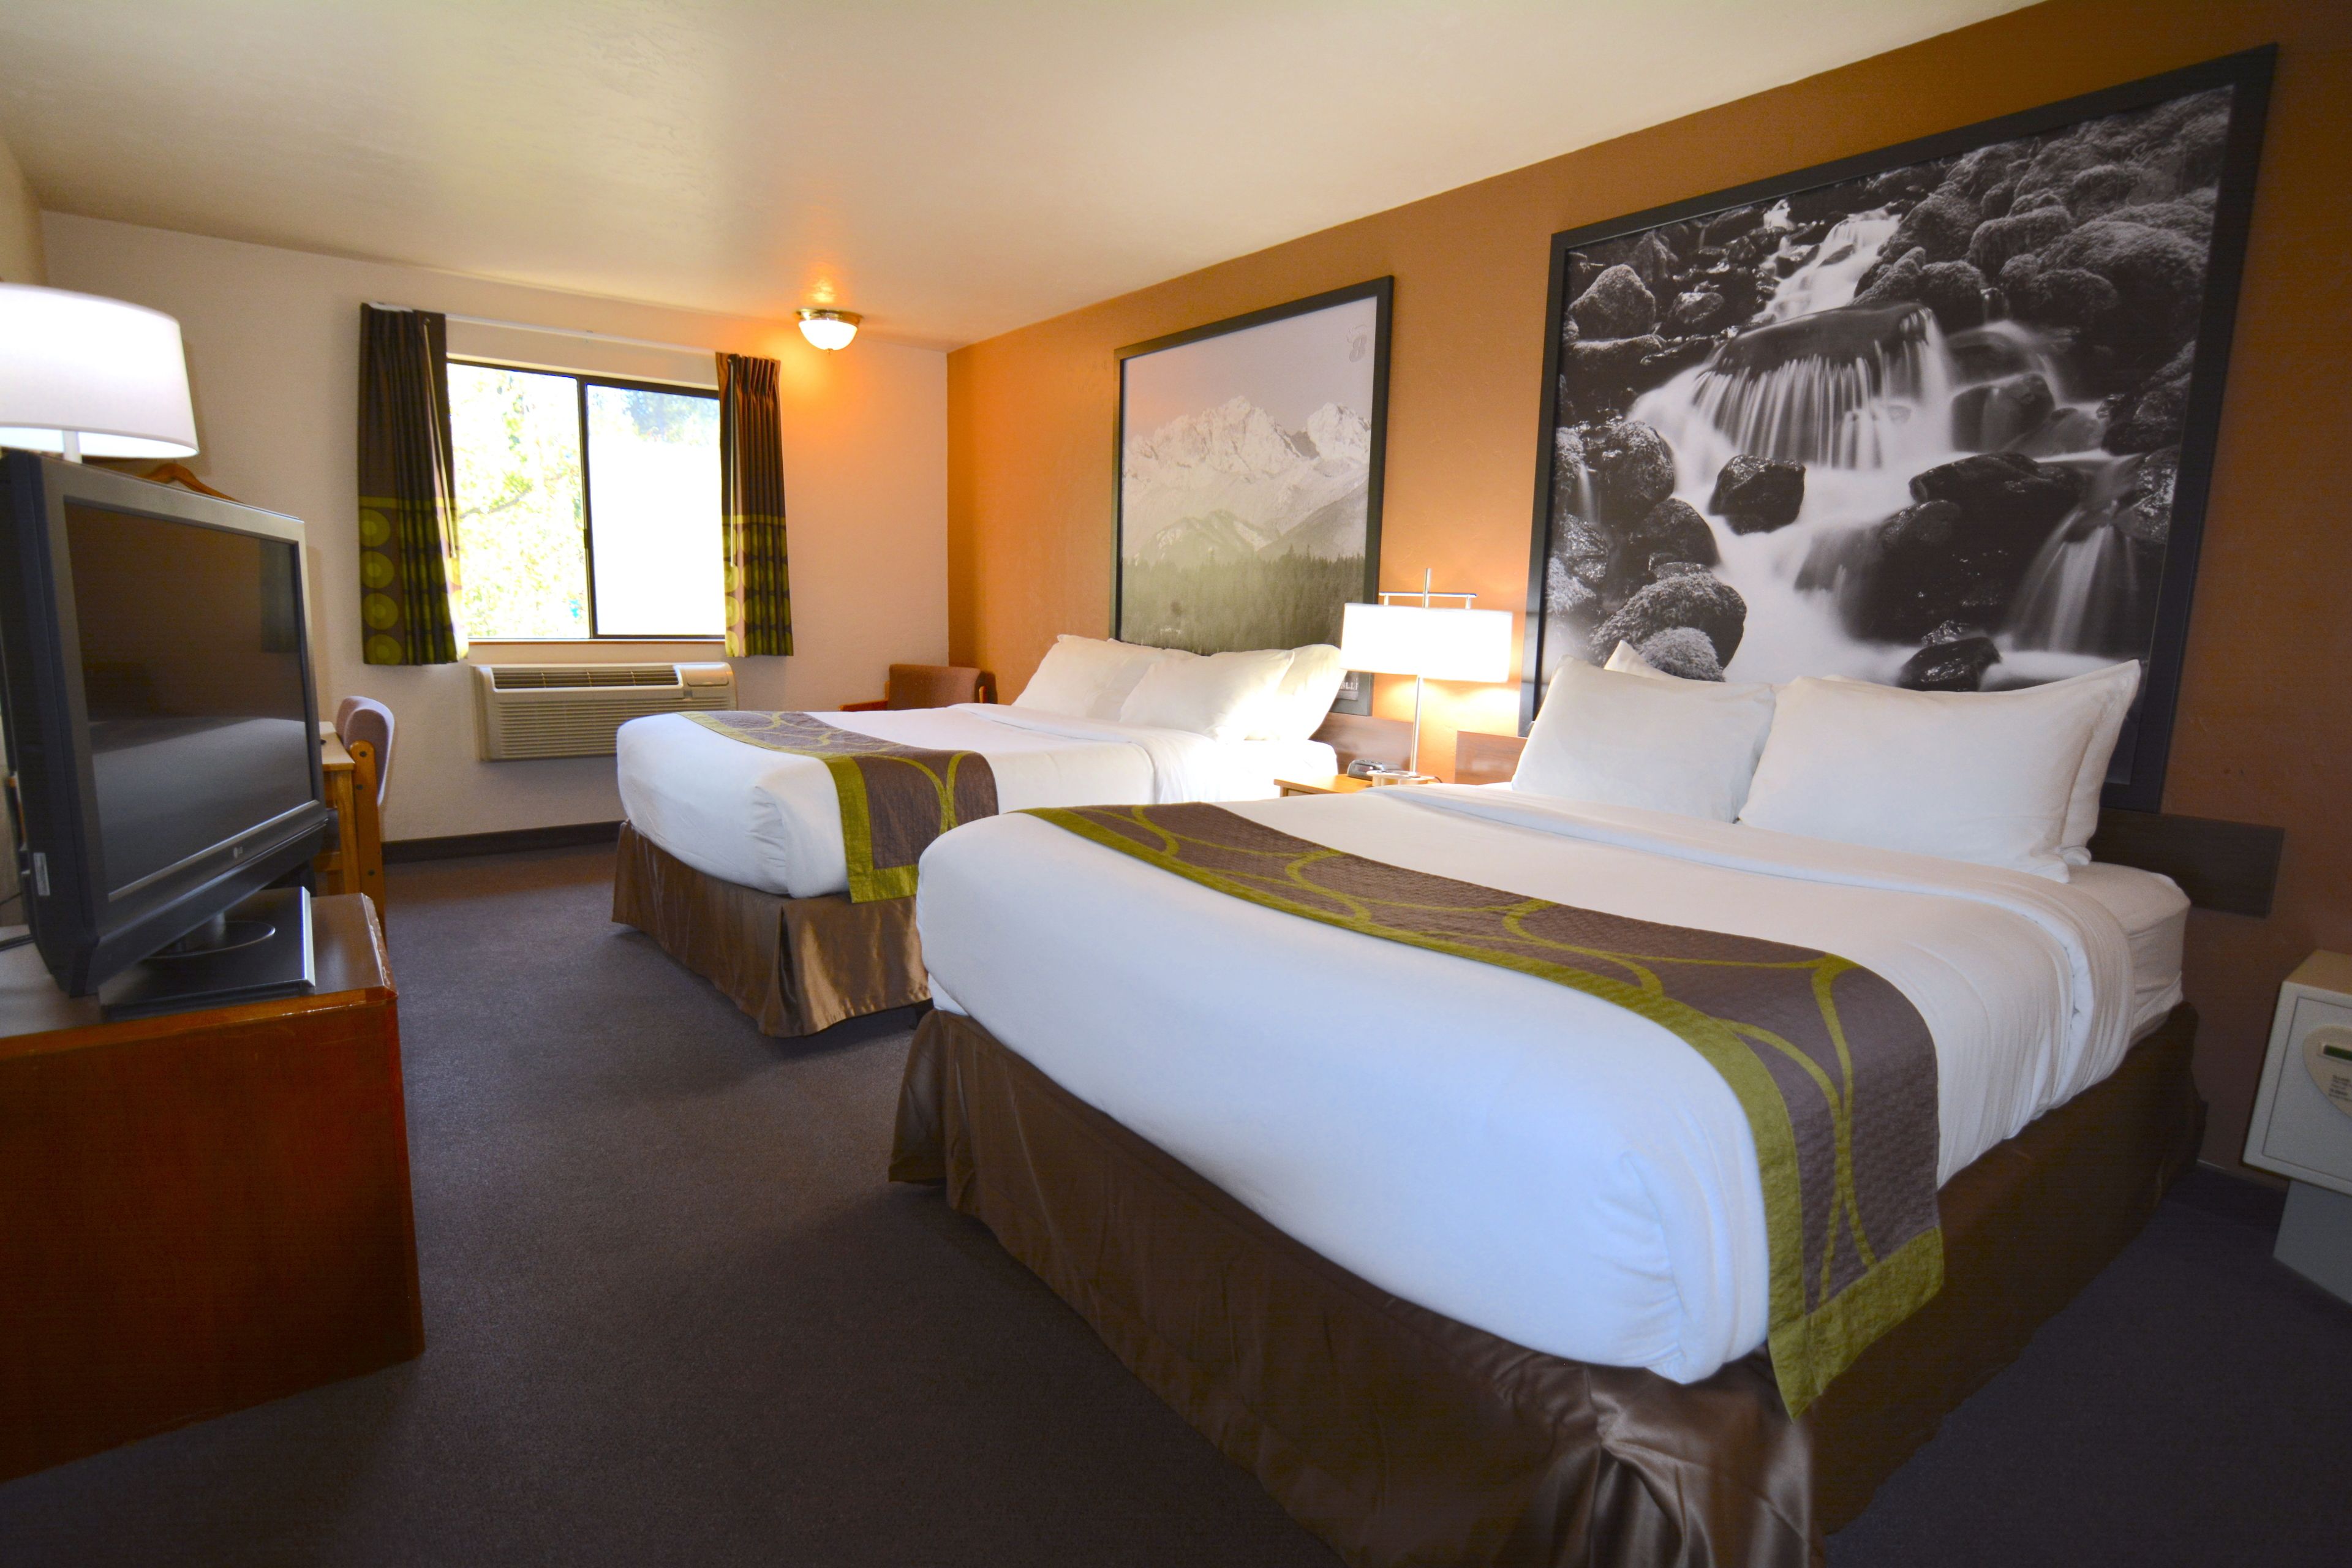 Premium bedding, in-room safe, desk, laptop workspace, Ocean Star Inn Grand Opening